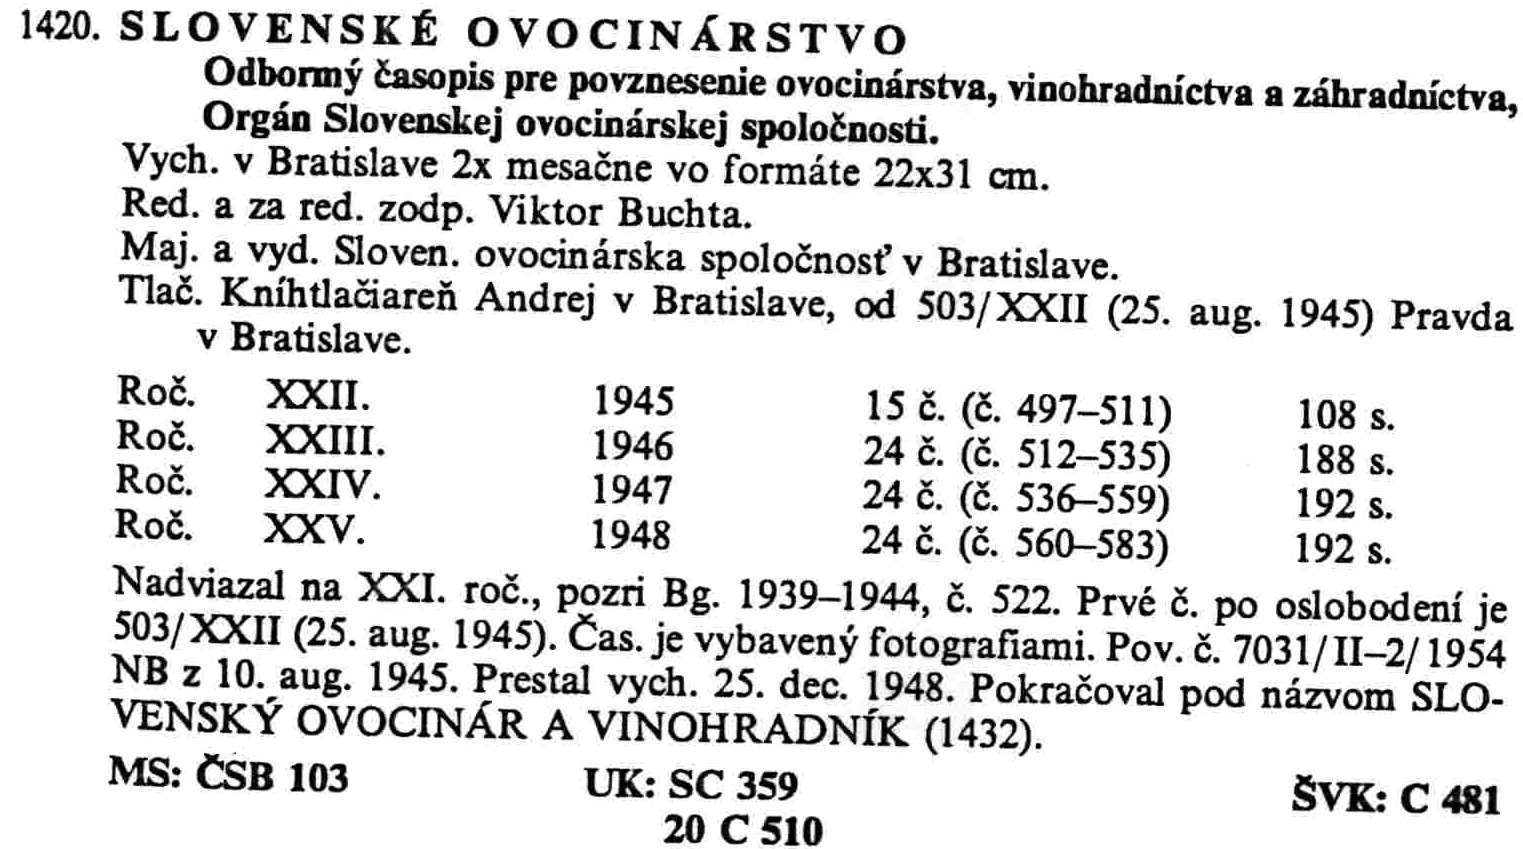 Entry for "Slovenske ovocinarstvo".